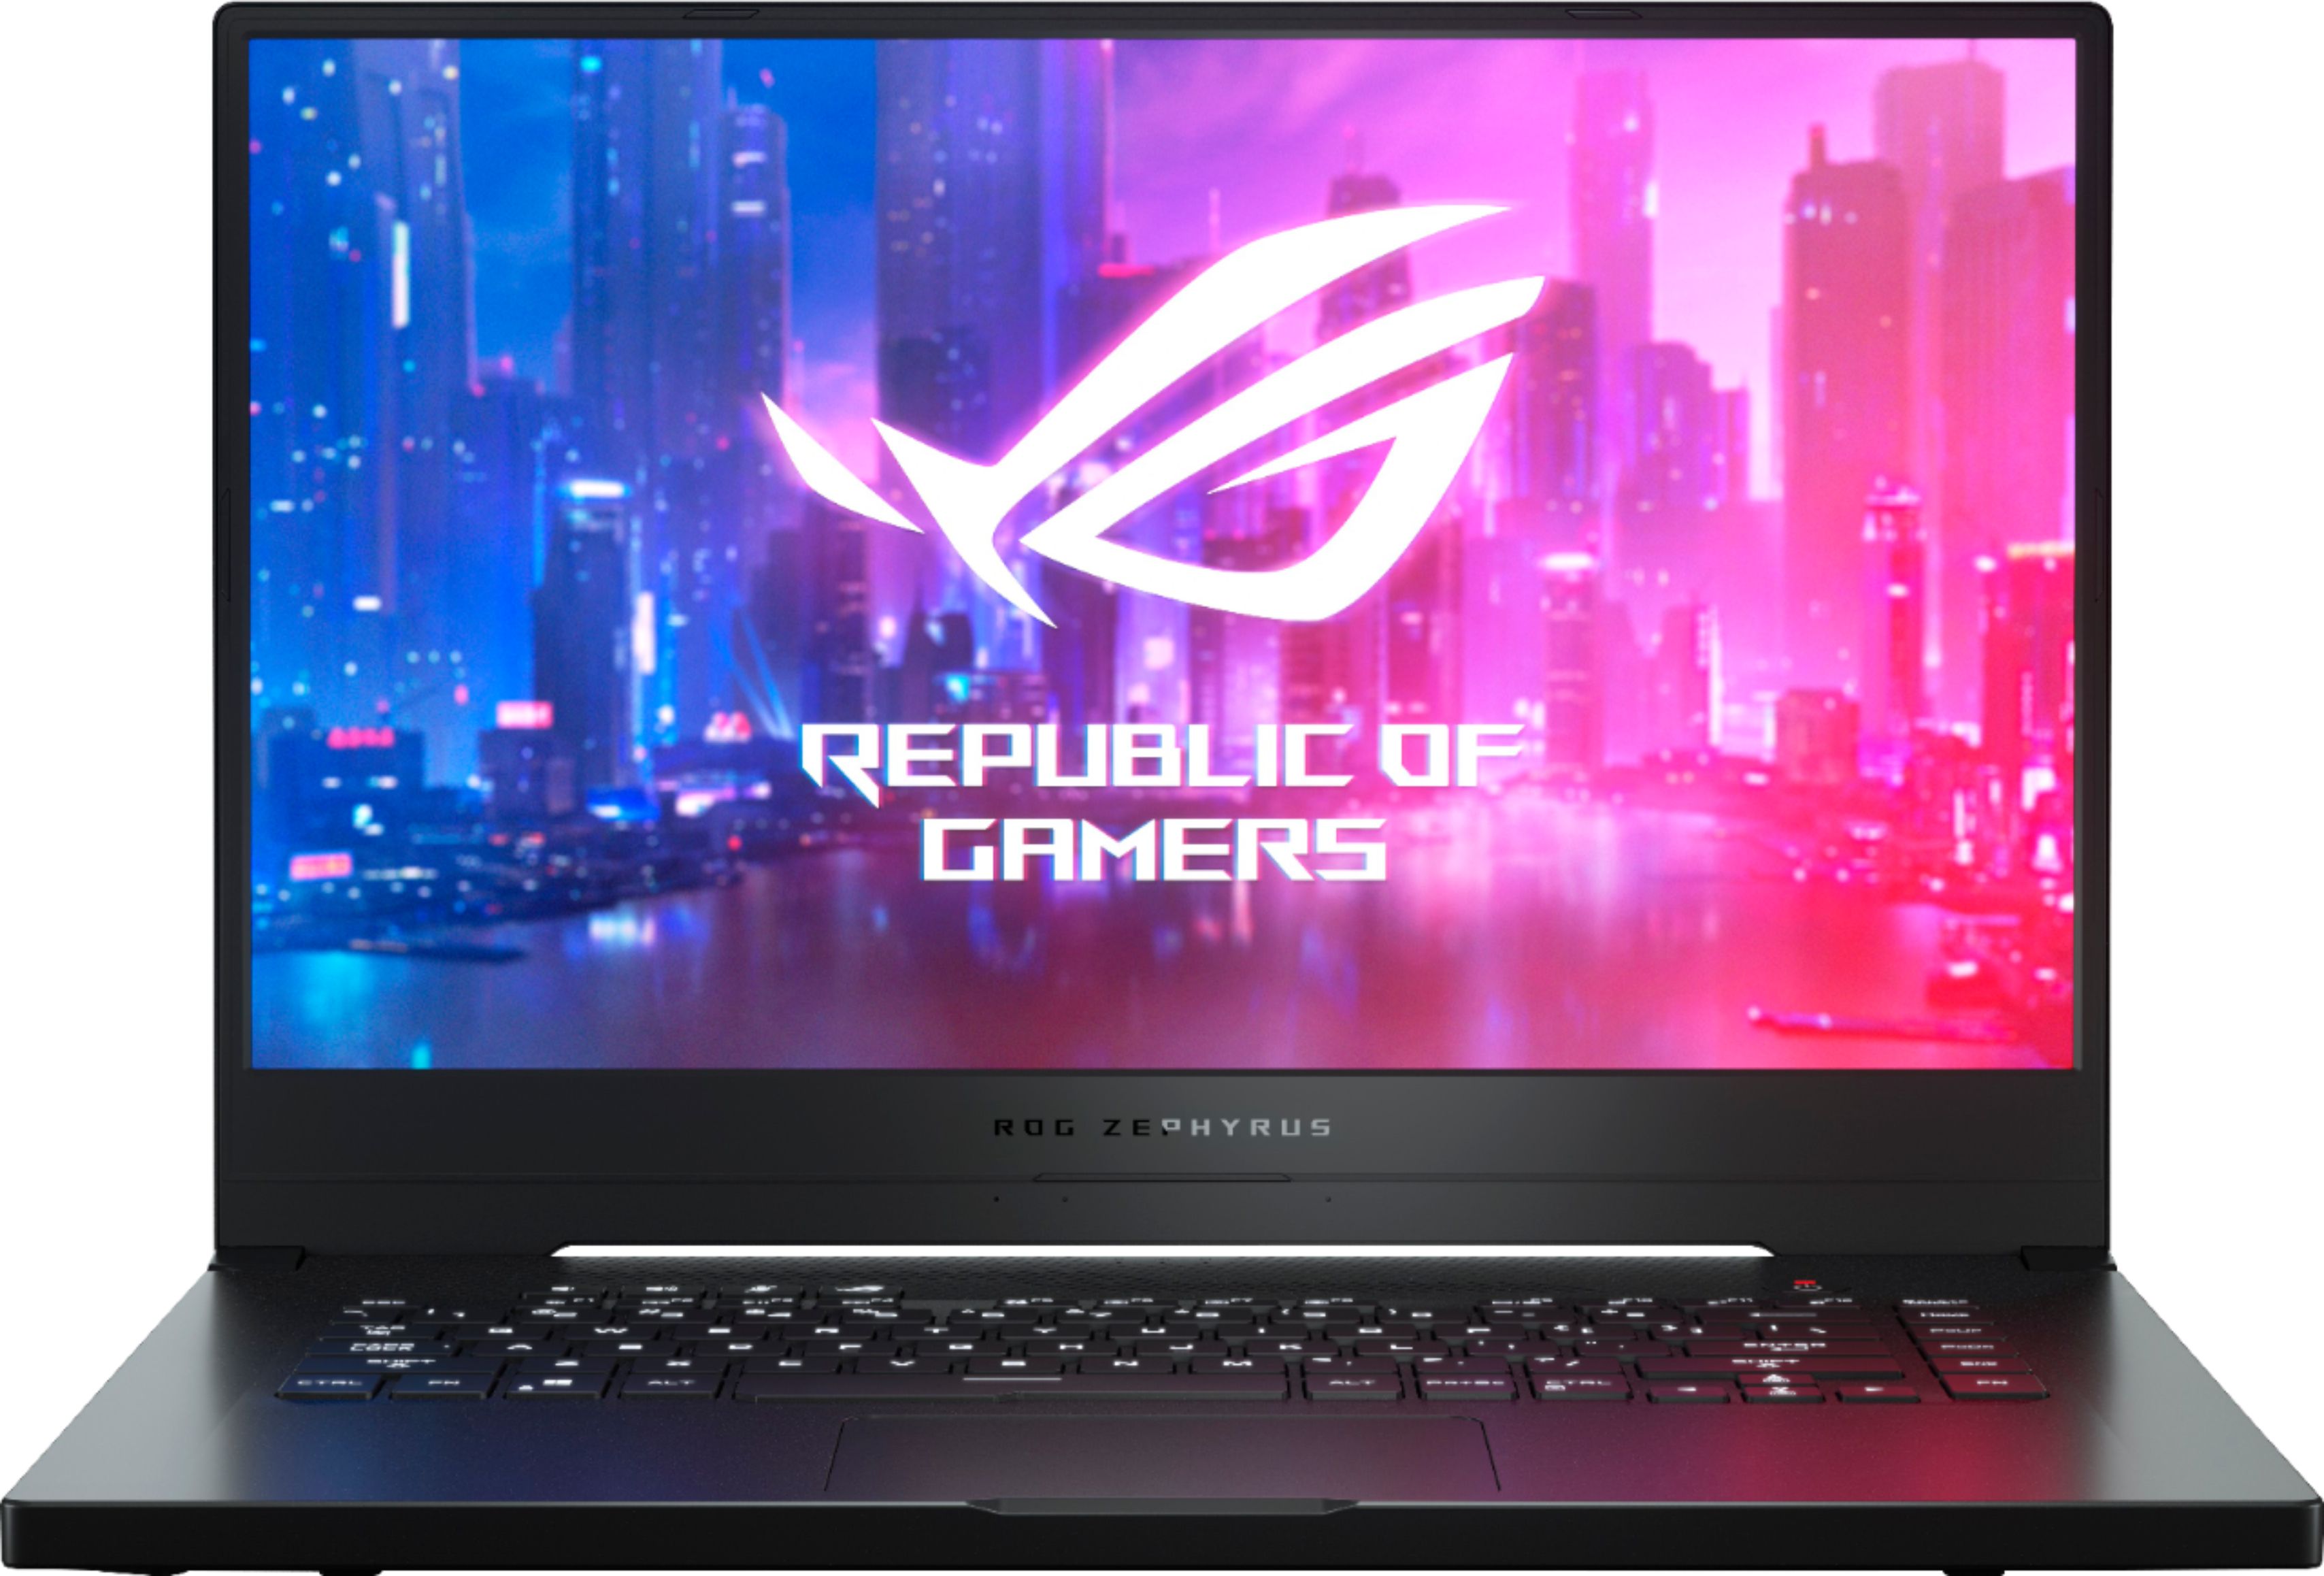 Asus Rog Zephyrus G 15 6 Gaming Laptop Amd Ryzen 7 16gb Memory Nvidia Geforce Gtx 1660 Ti Max Q 512gb Ssd Metalic Hairline Black Ga502du Br7n6 Best Buy